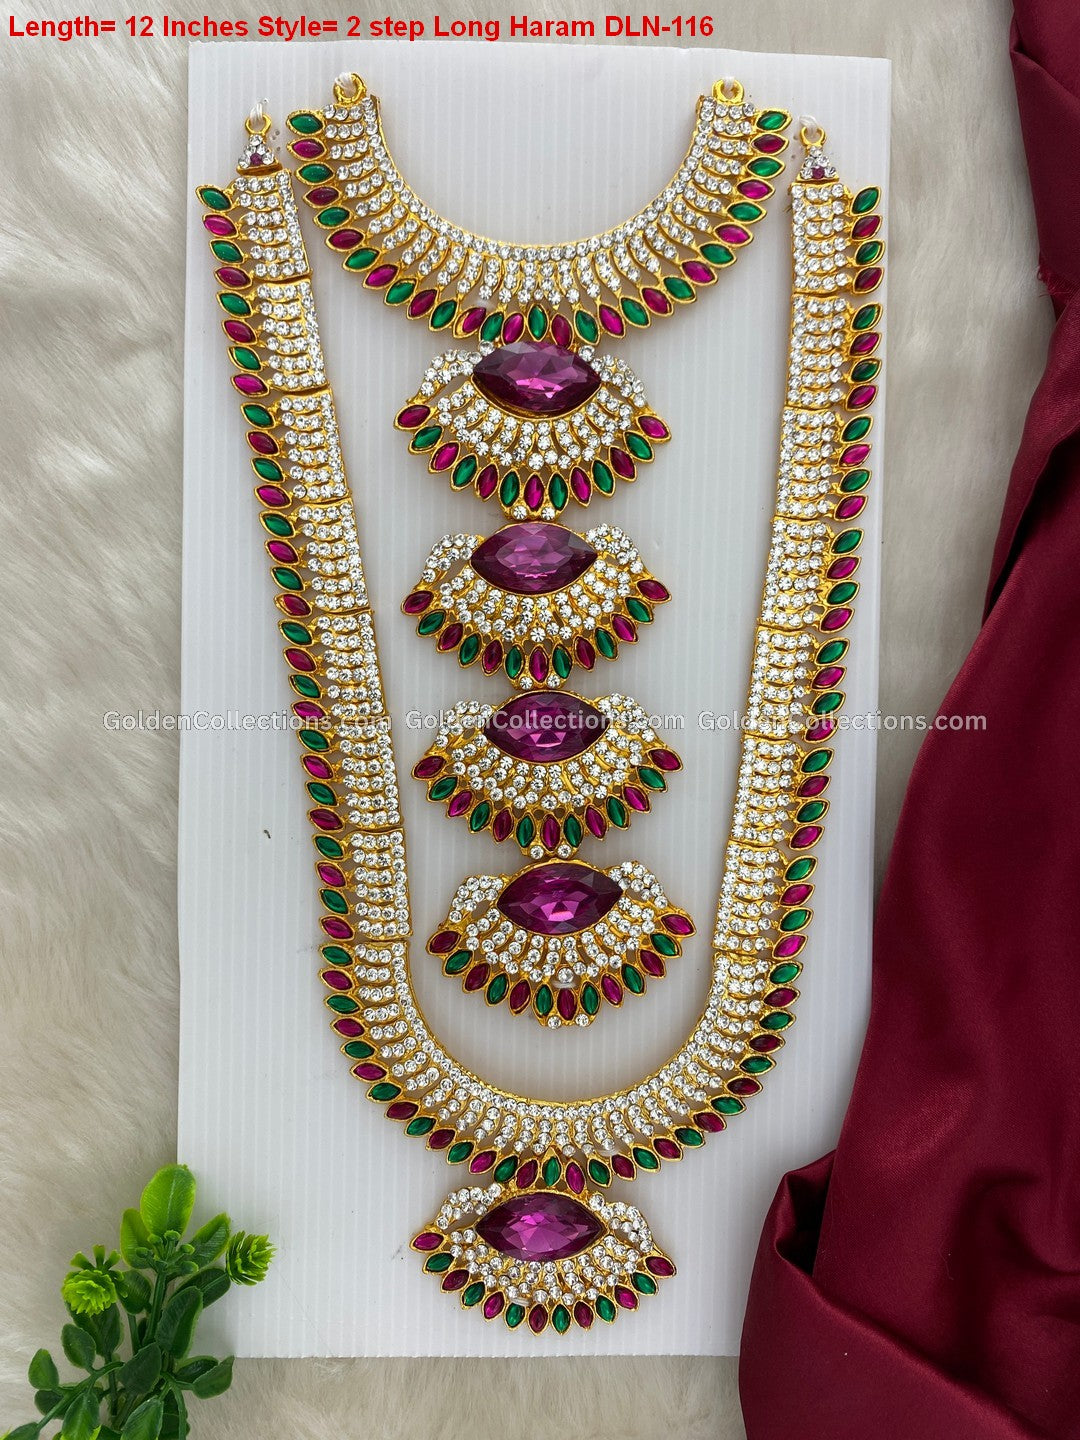 Exquisite Long Necklace Designs: Explore Stunning Varieties DLN-116